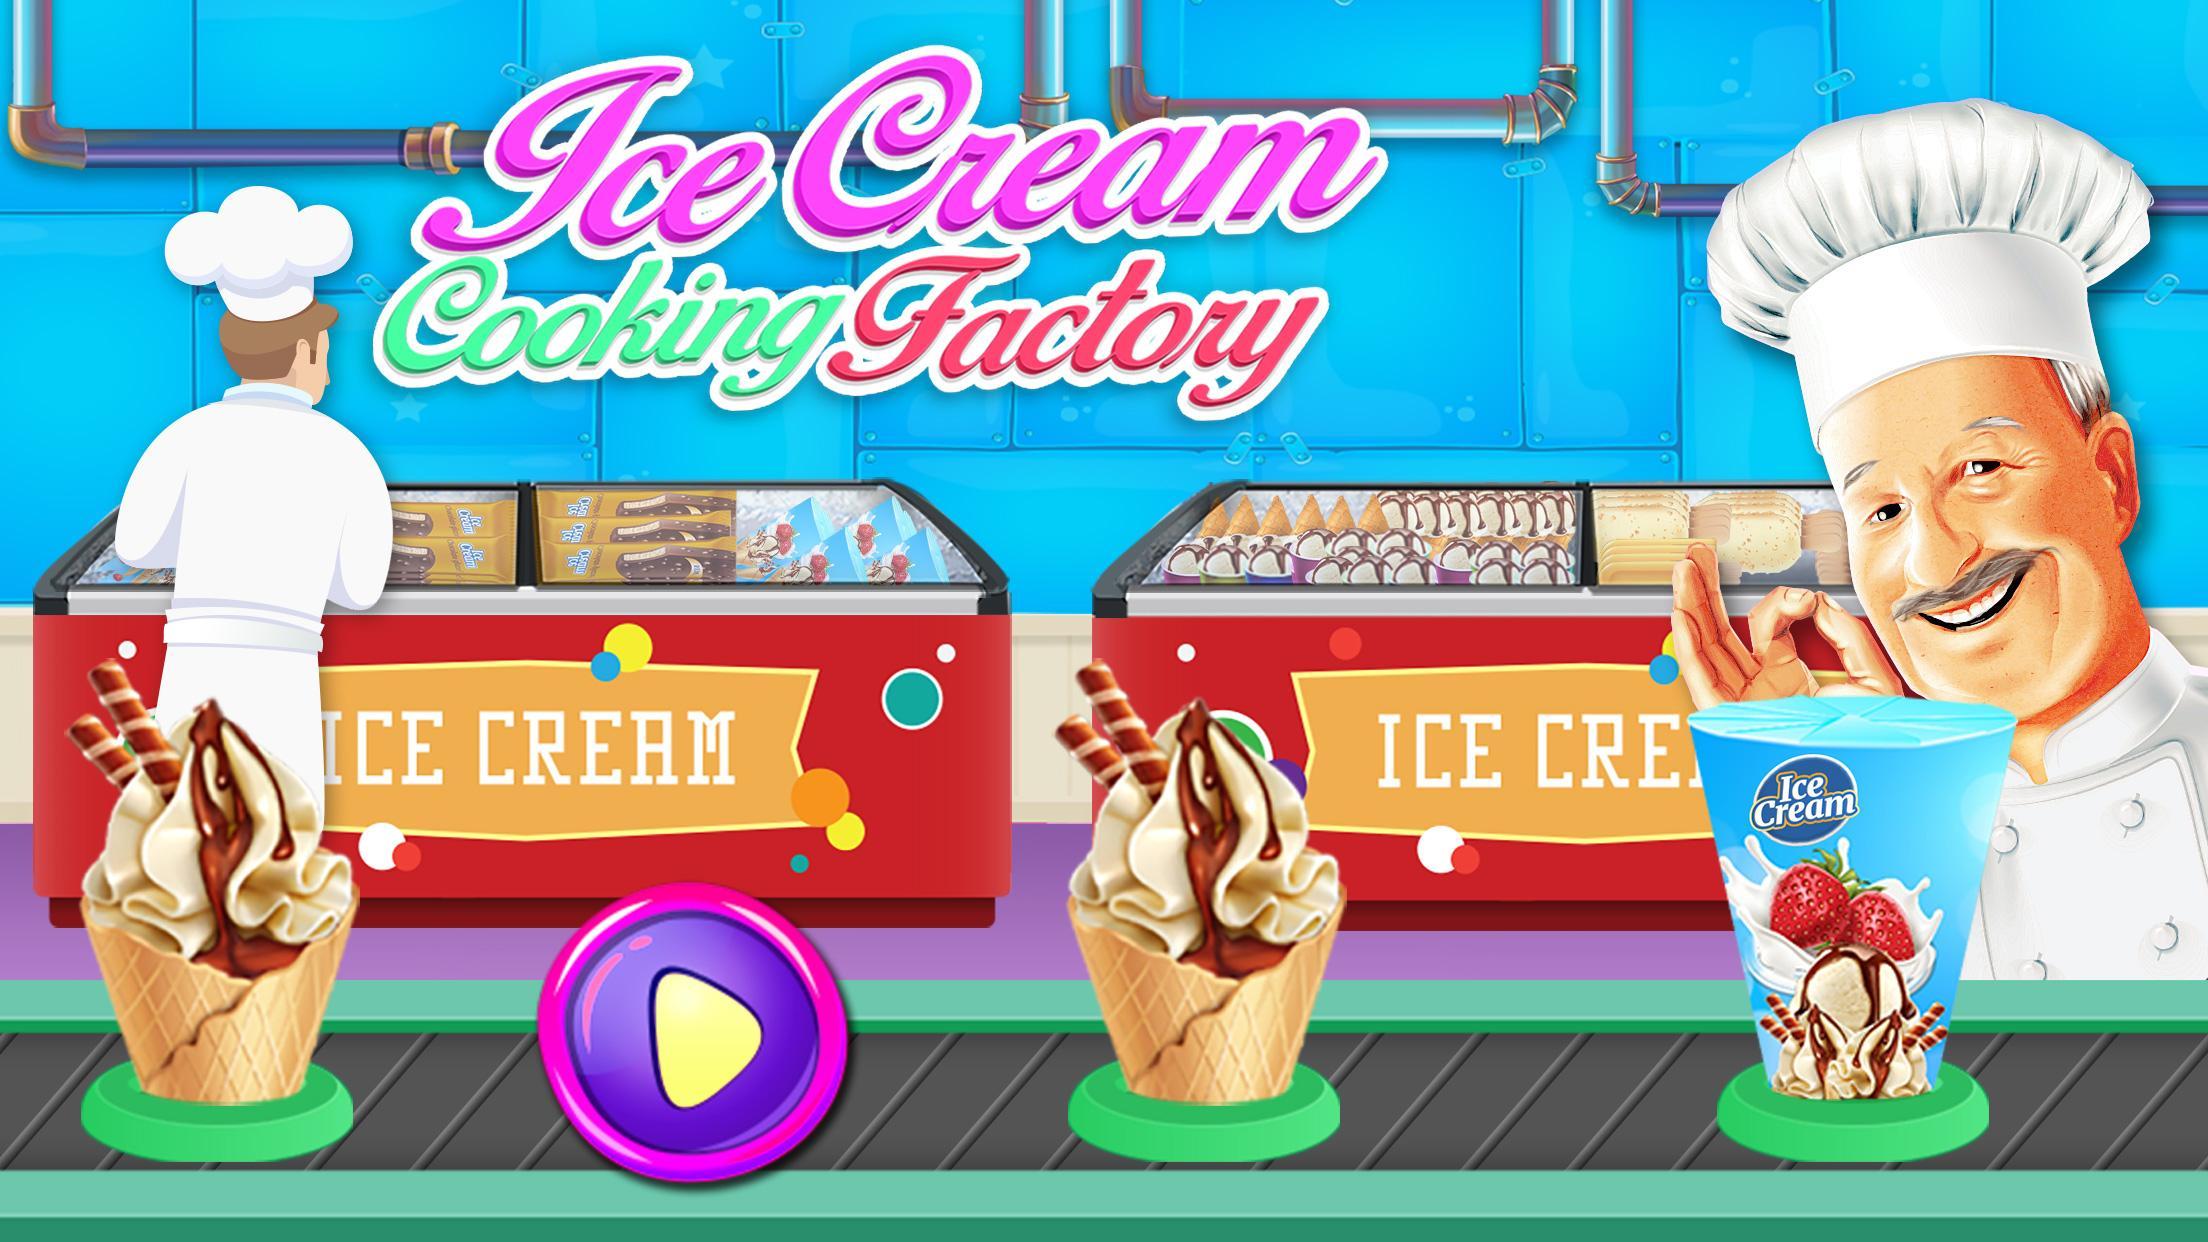 Игра фабрика мороженого. Готовка мороженого игры. Игра где готовят мороженое. 8 версию мороженщика